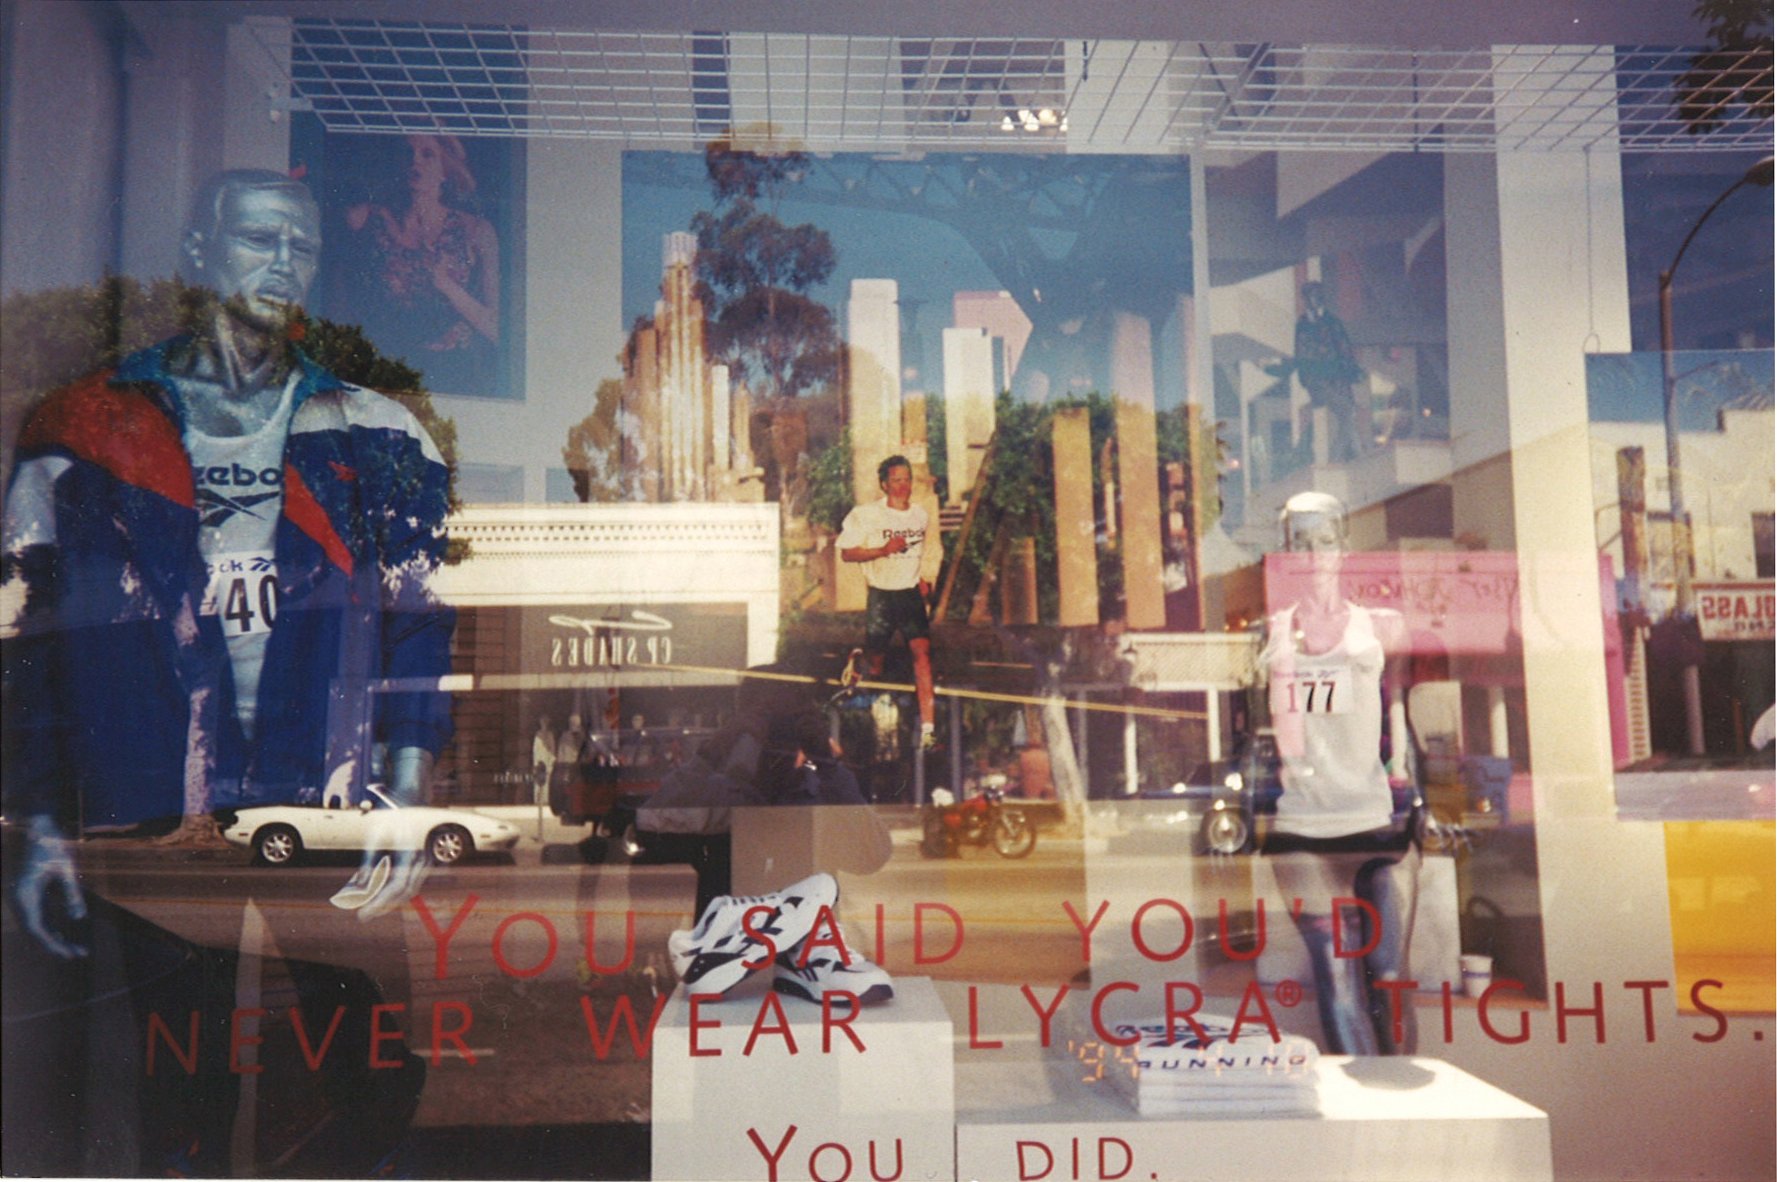 Reebok store, Main Street, Santa Monica, CA, mid 90s